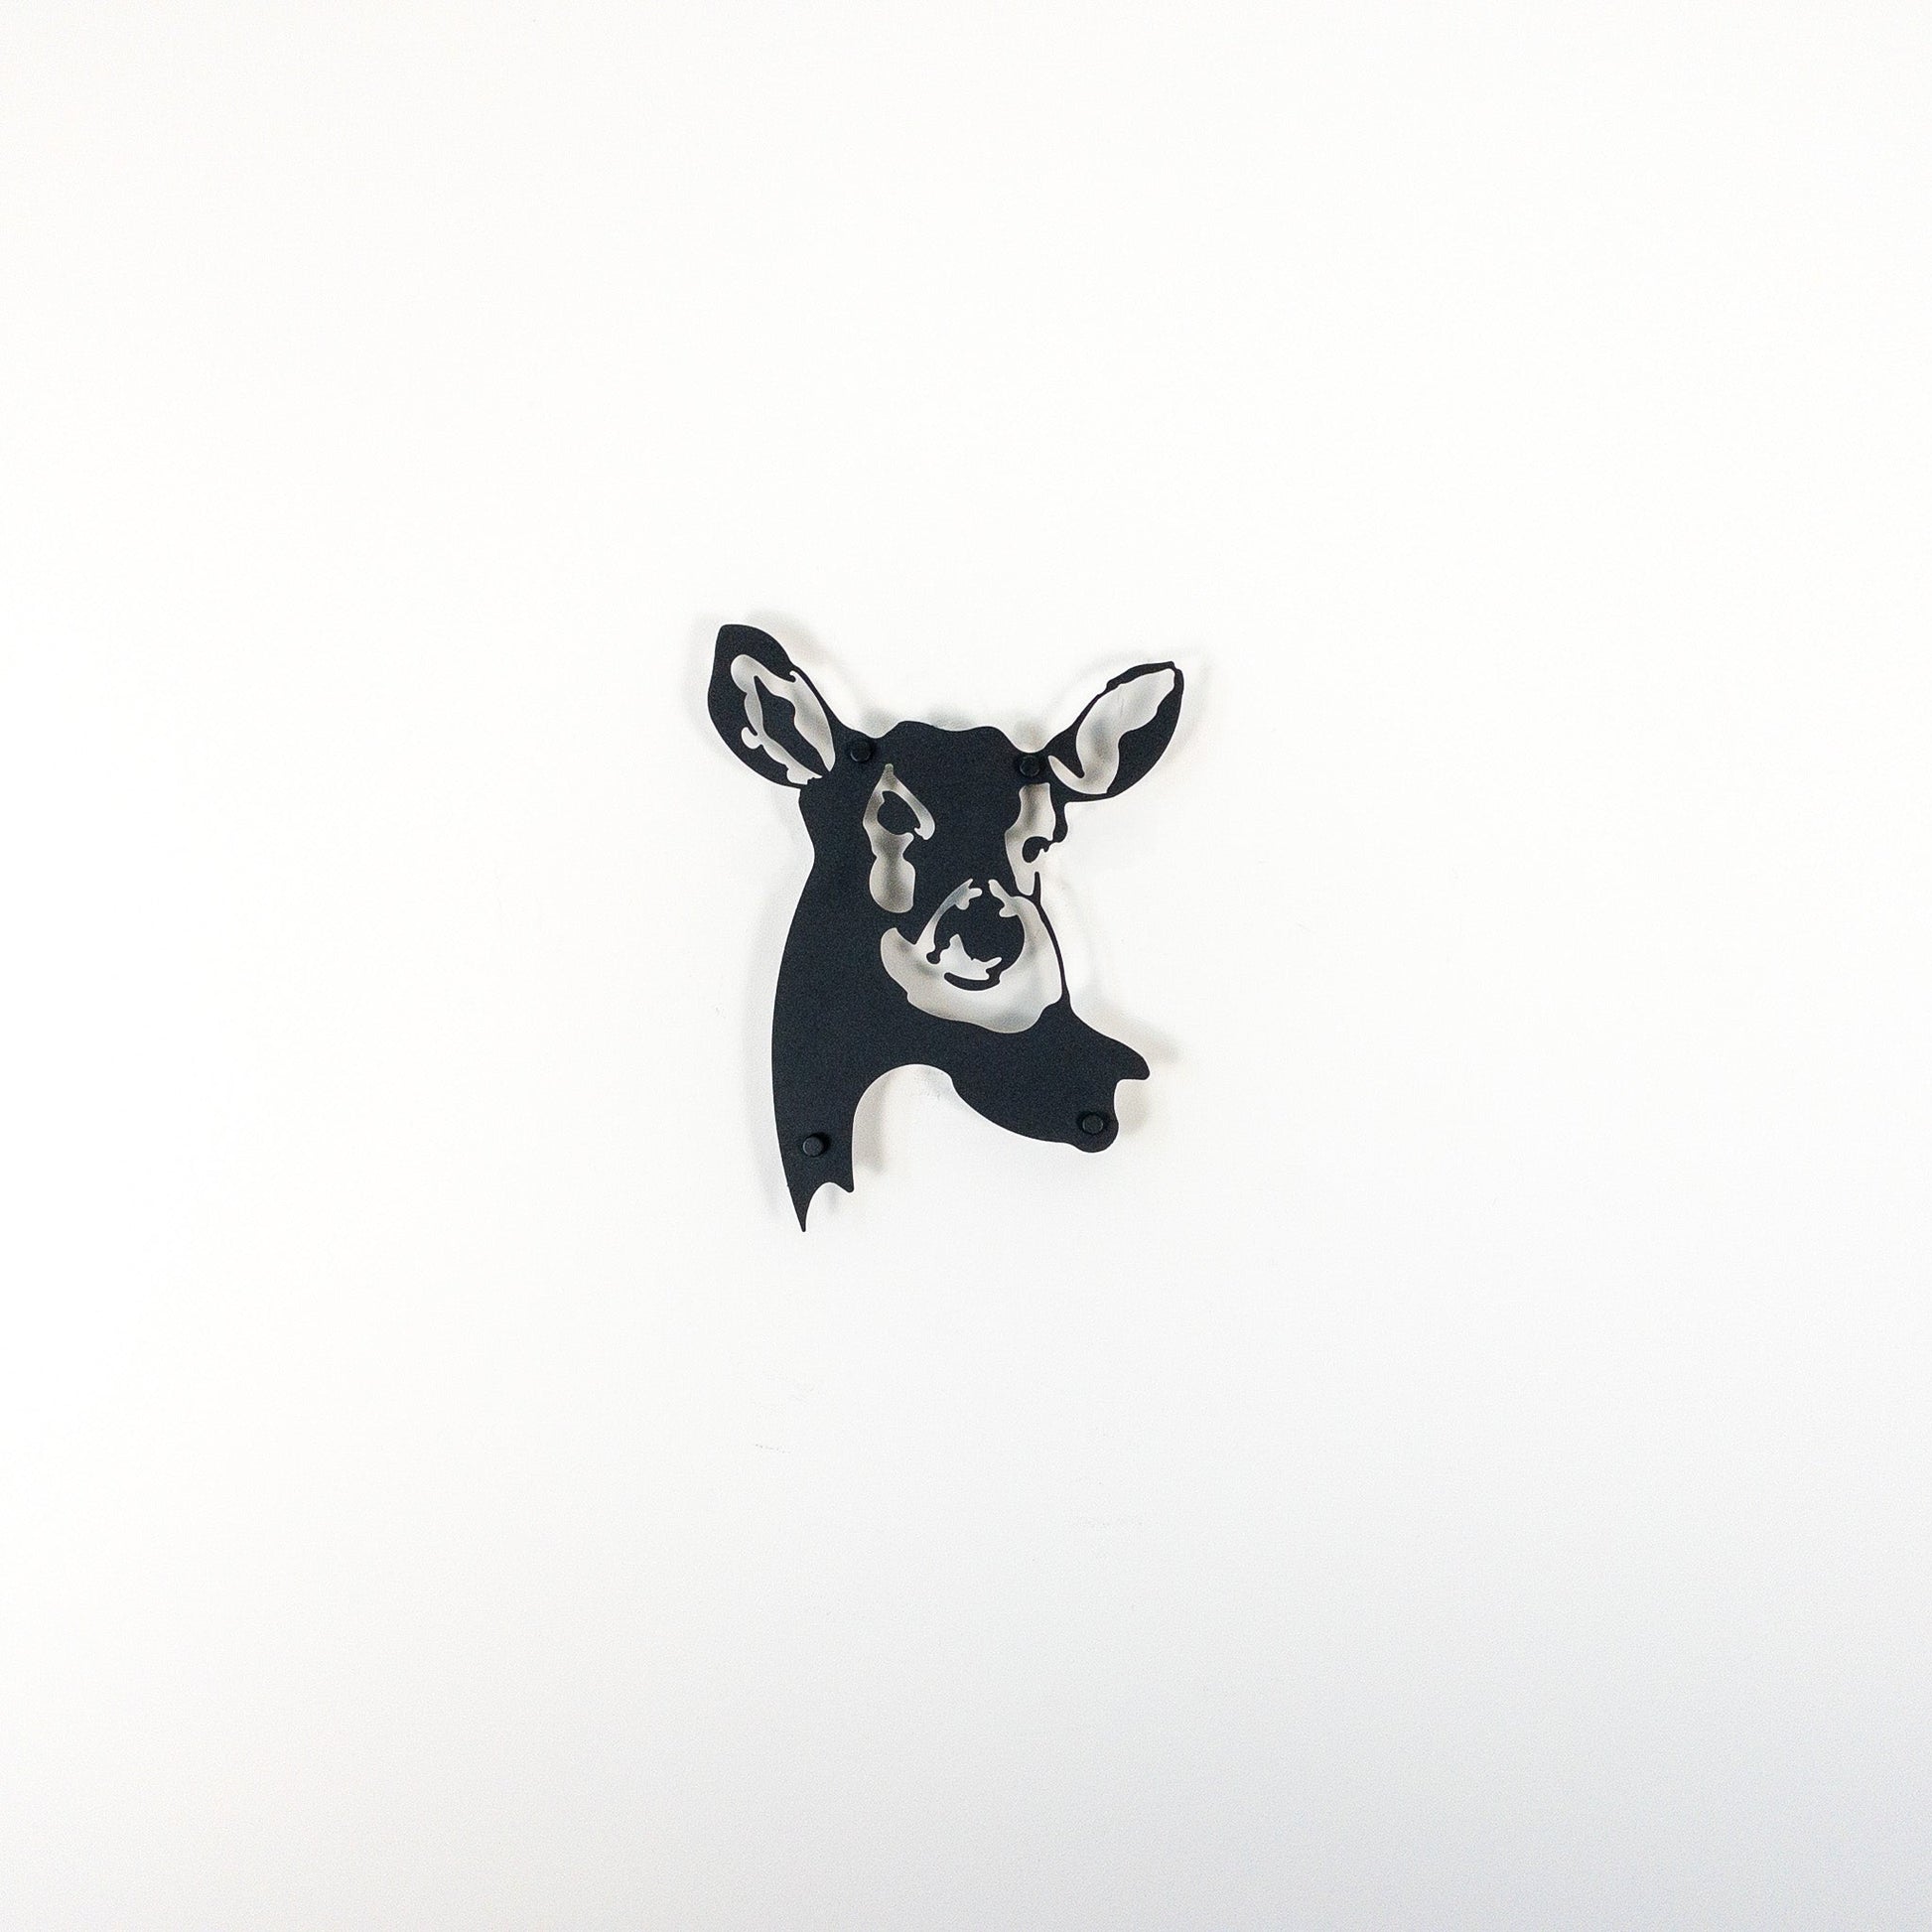 A metal wall decor White-Tailed Deer metal head